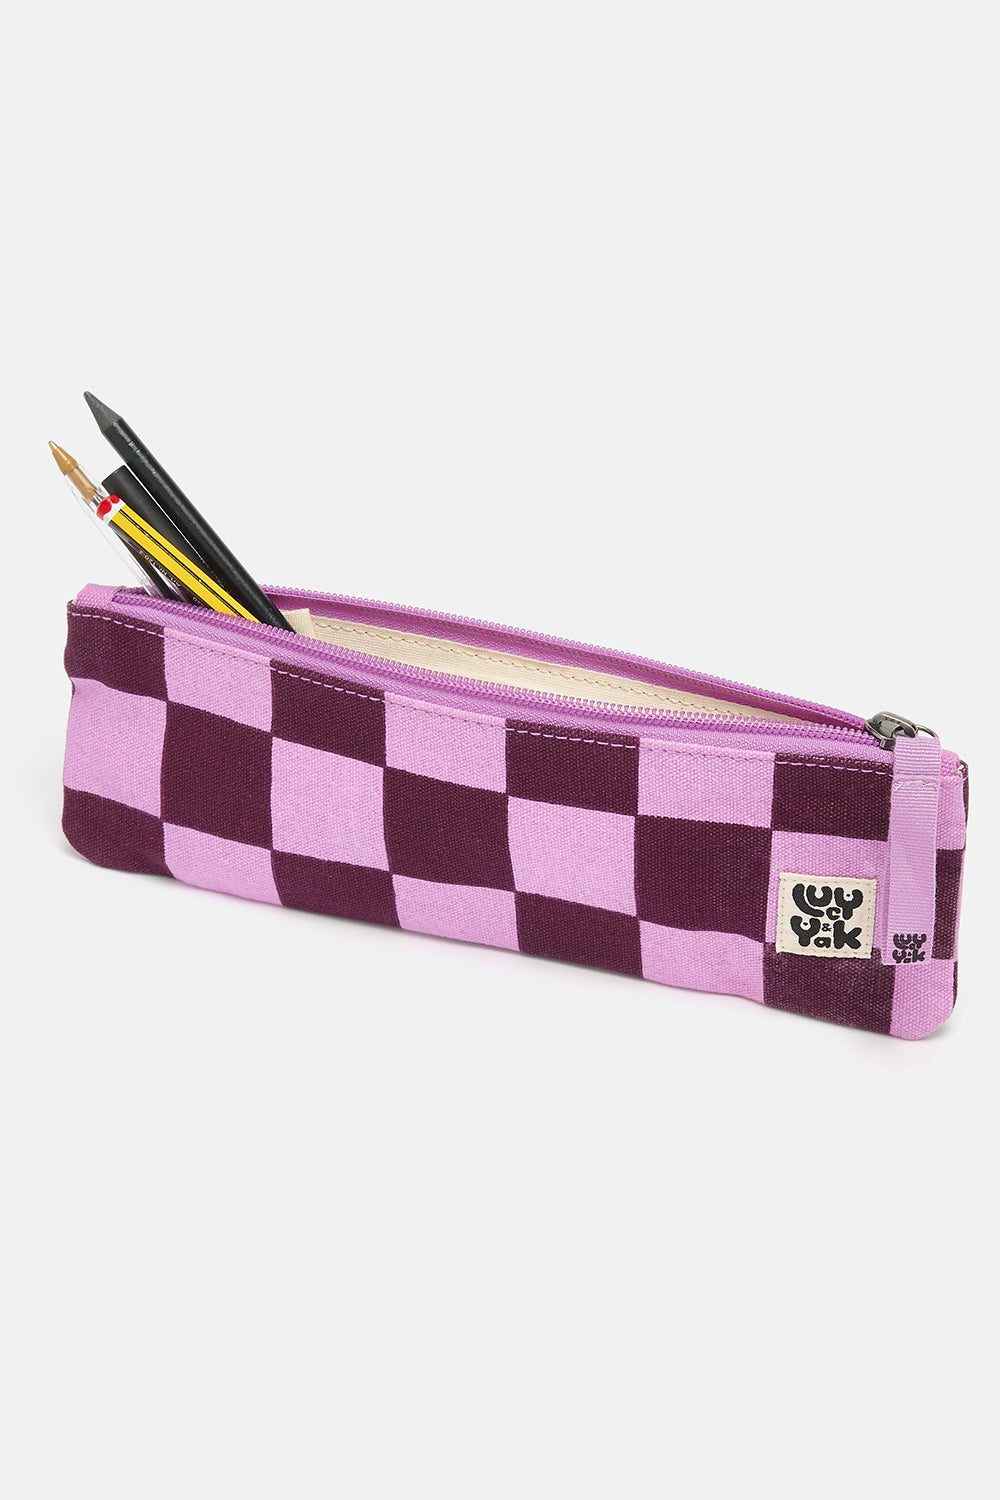 Pen Case - Pencil Case with zipper - Falcon Travelers